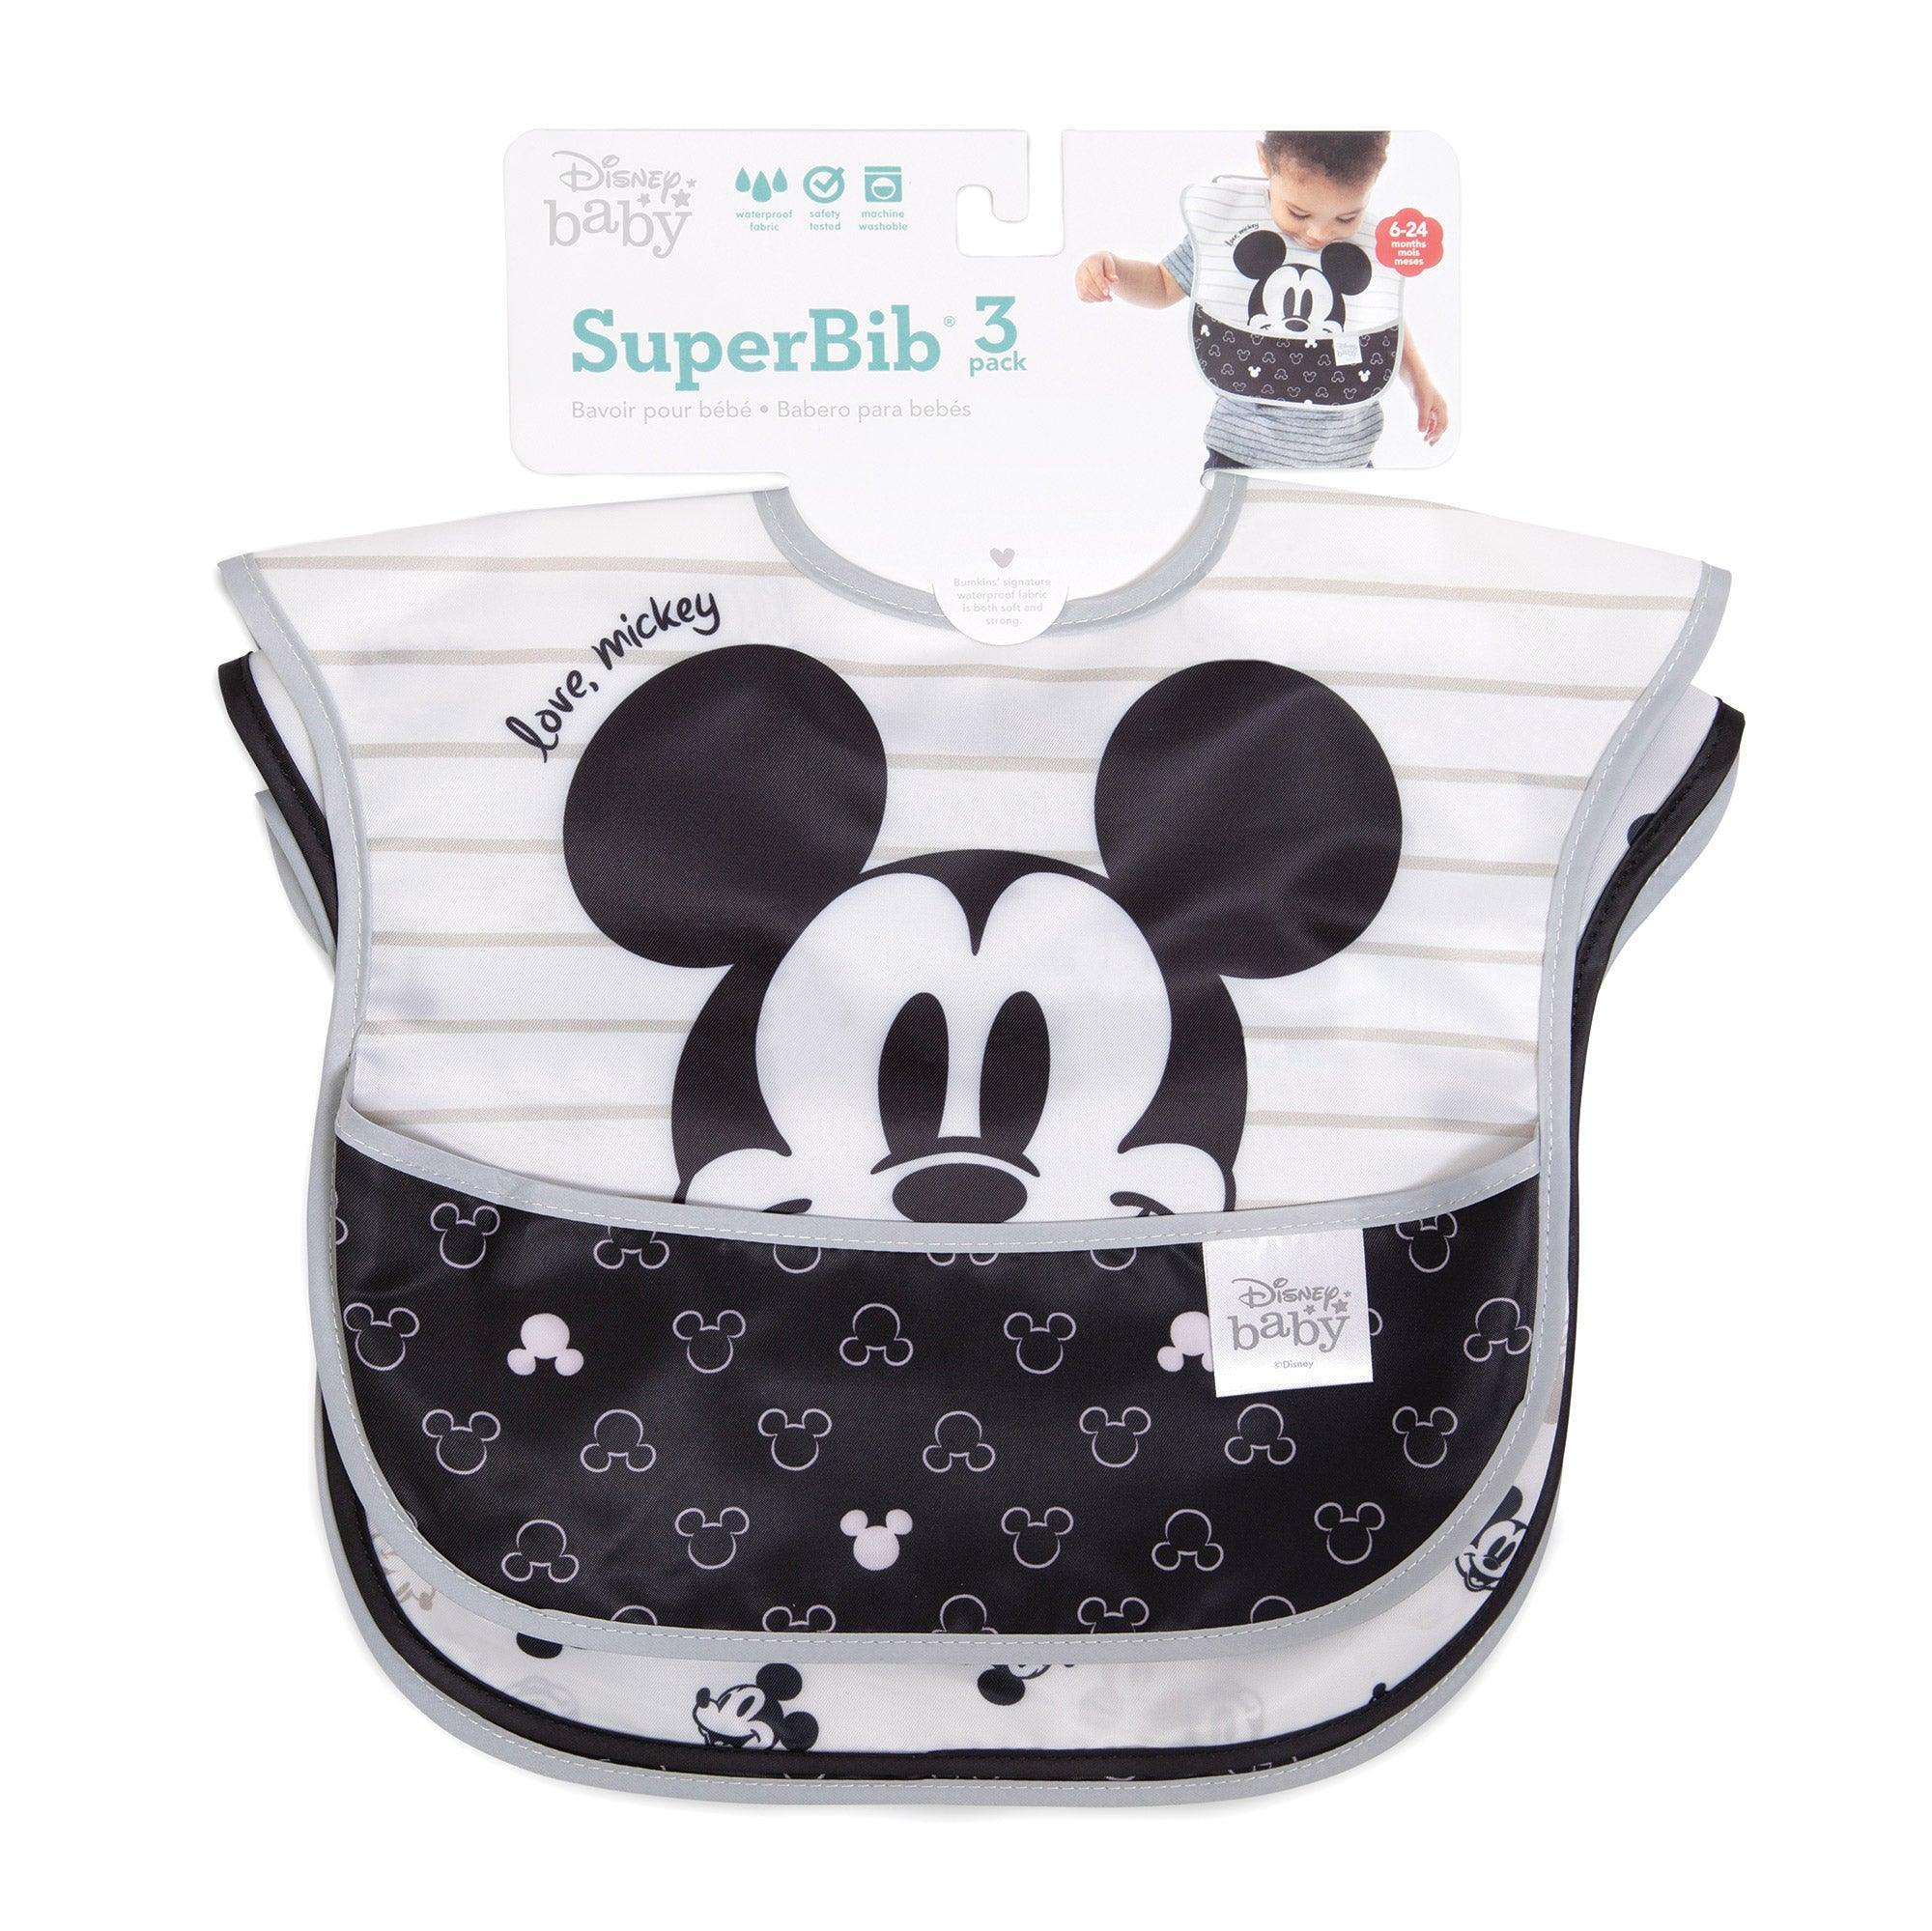 SuperBib® 3 Pack: Love, Mickey - Bumkins